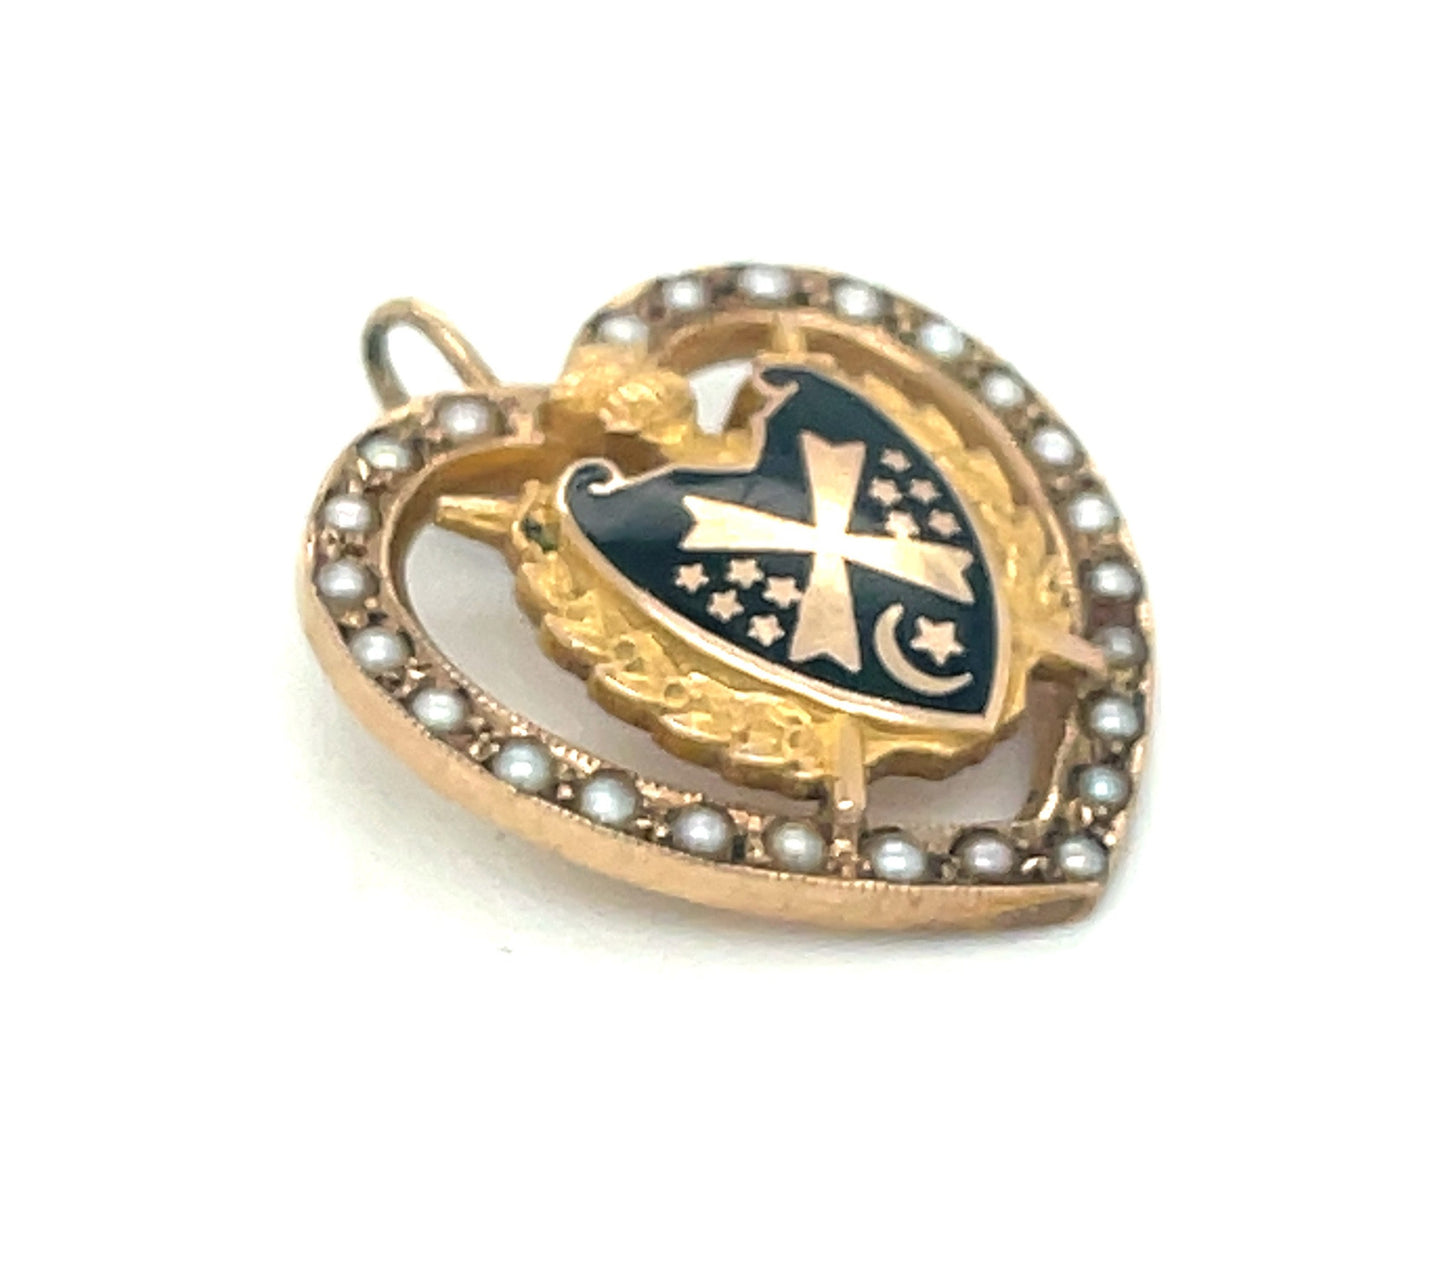 Vintage 10k Gold Heart Sorority Pendant Seed Pearls, Black Enamel, Crescent Moon and Stars, Shield